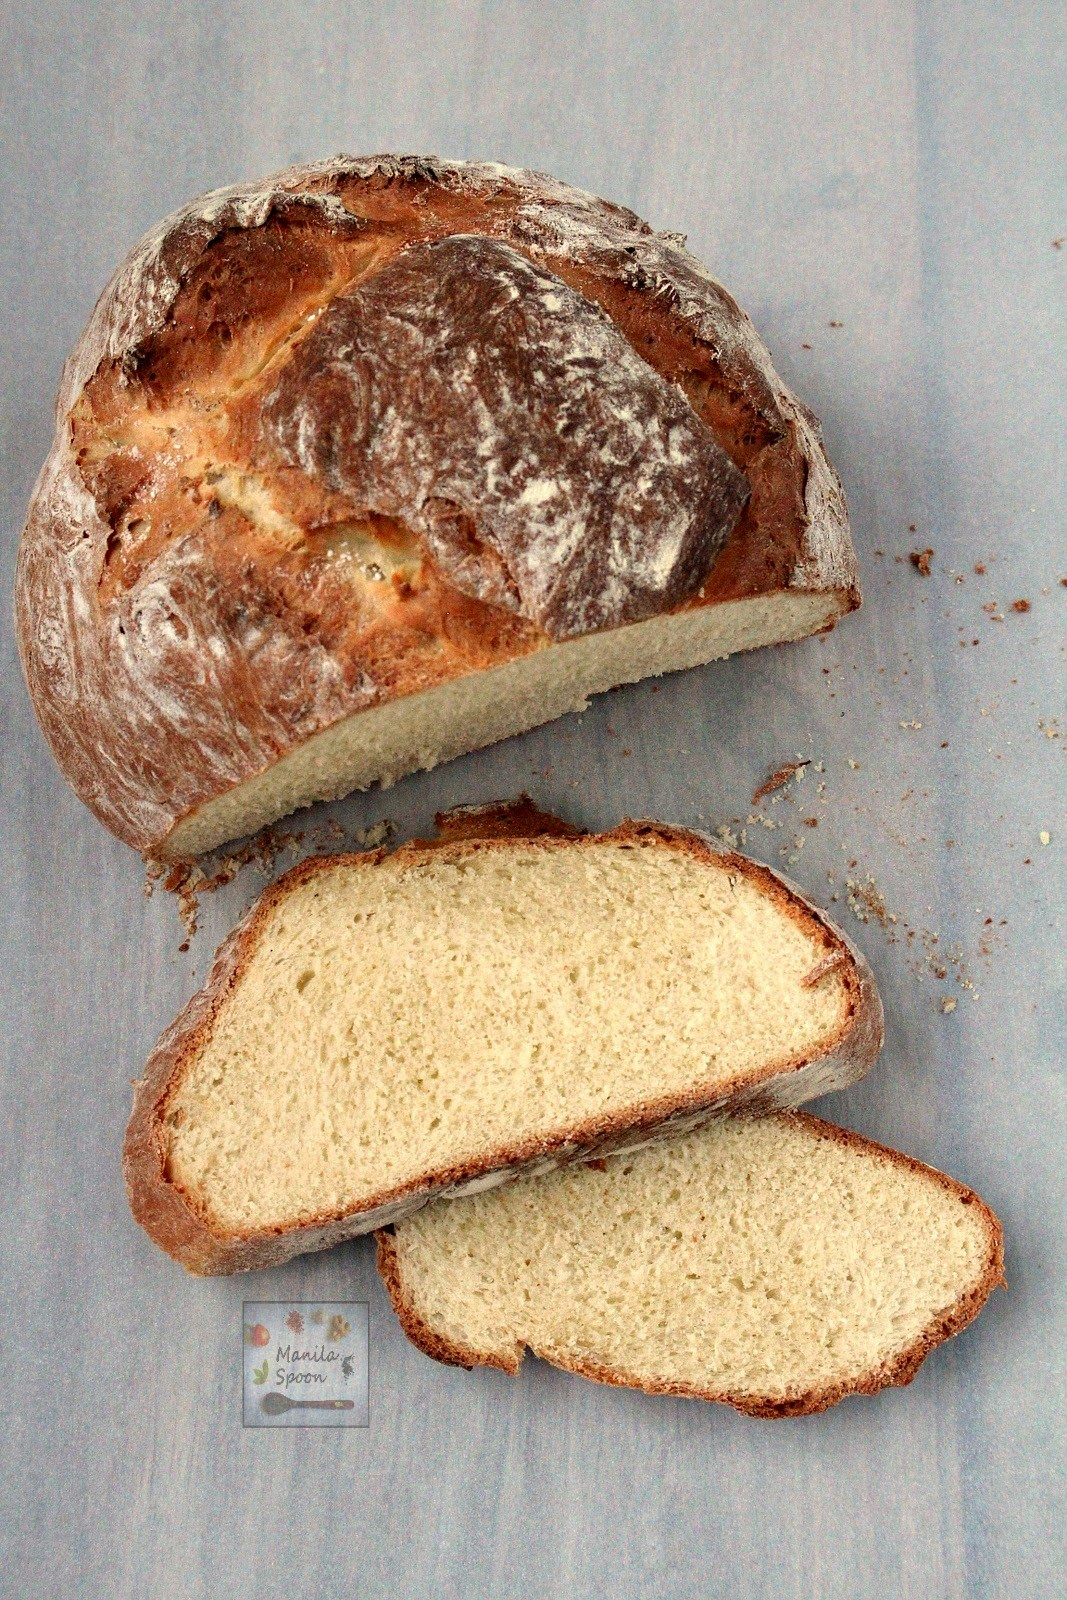 Rustic Bread Recipe
 Easy Homemade Rustic Bread